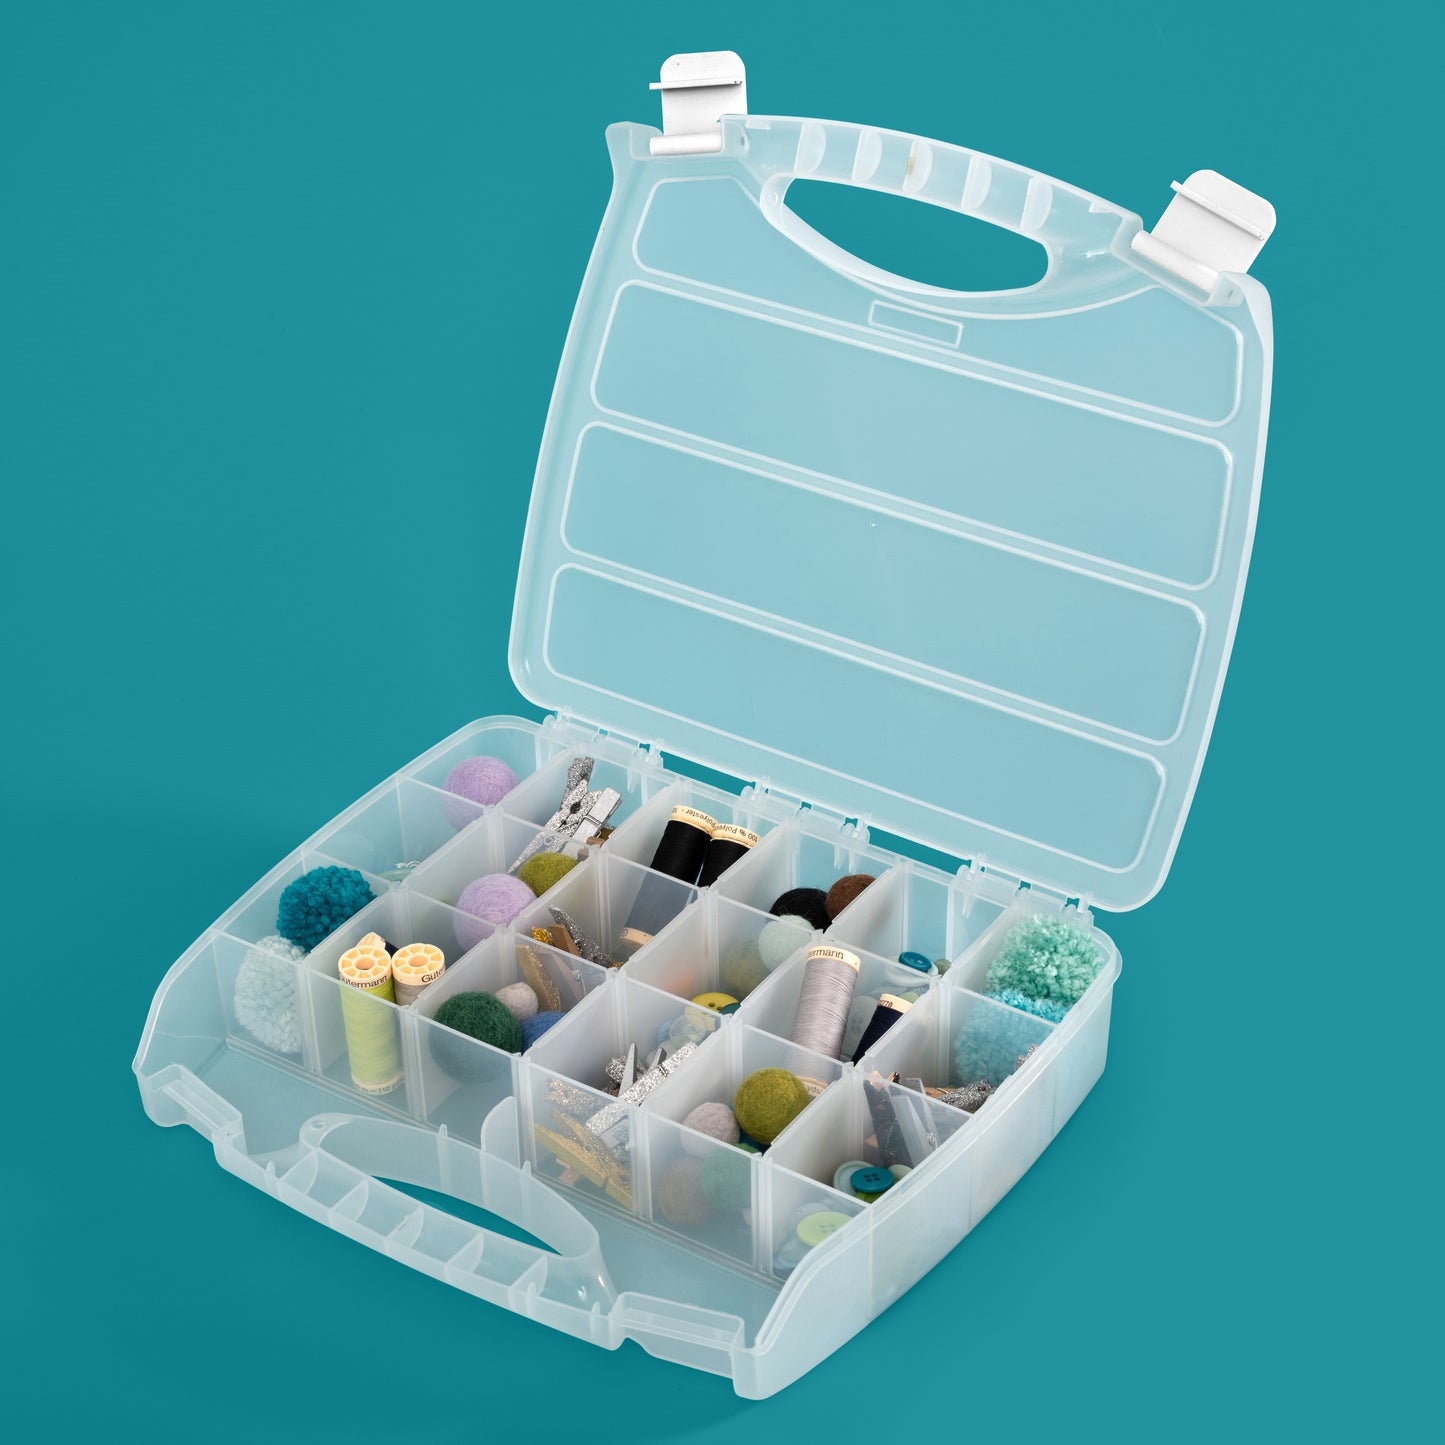 We R Divider Box Translucent Plastic Storage-12"X10"X2.4" Case